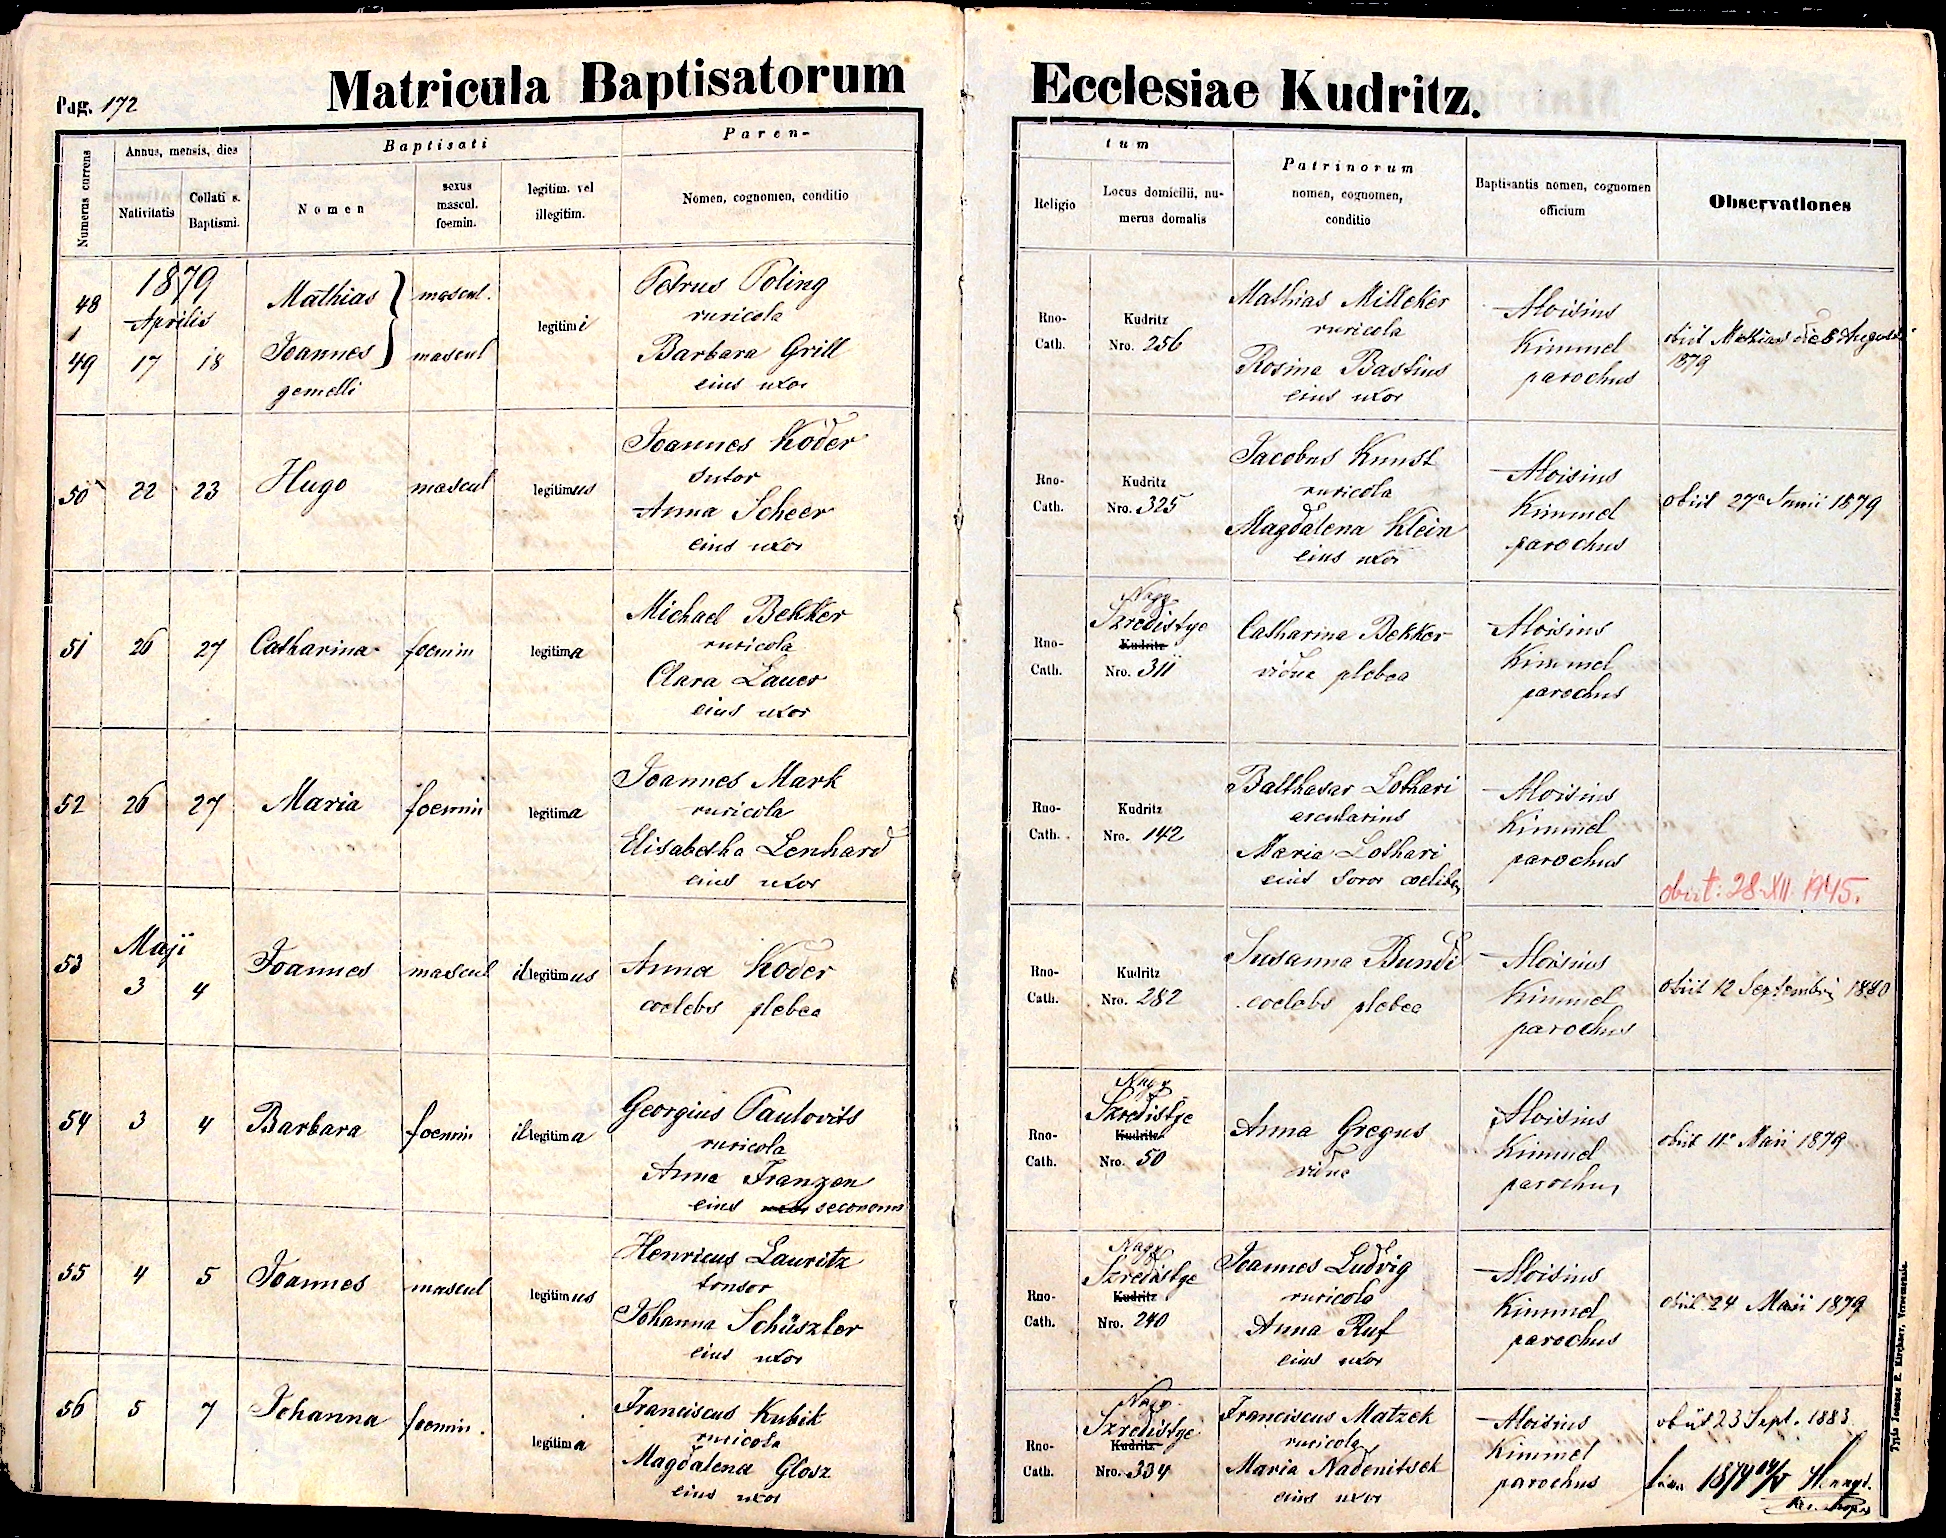 images/church_records/BIRTHS/1884-1899B/1895/172